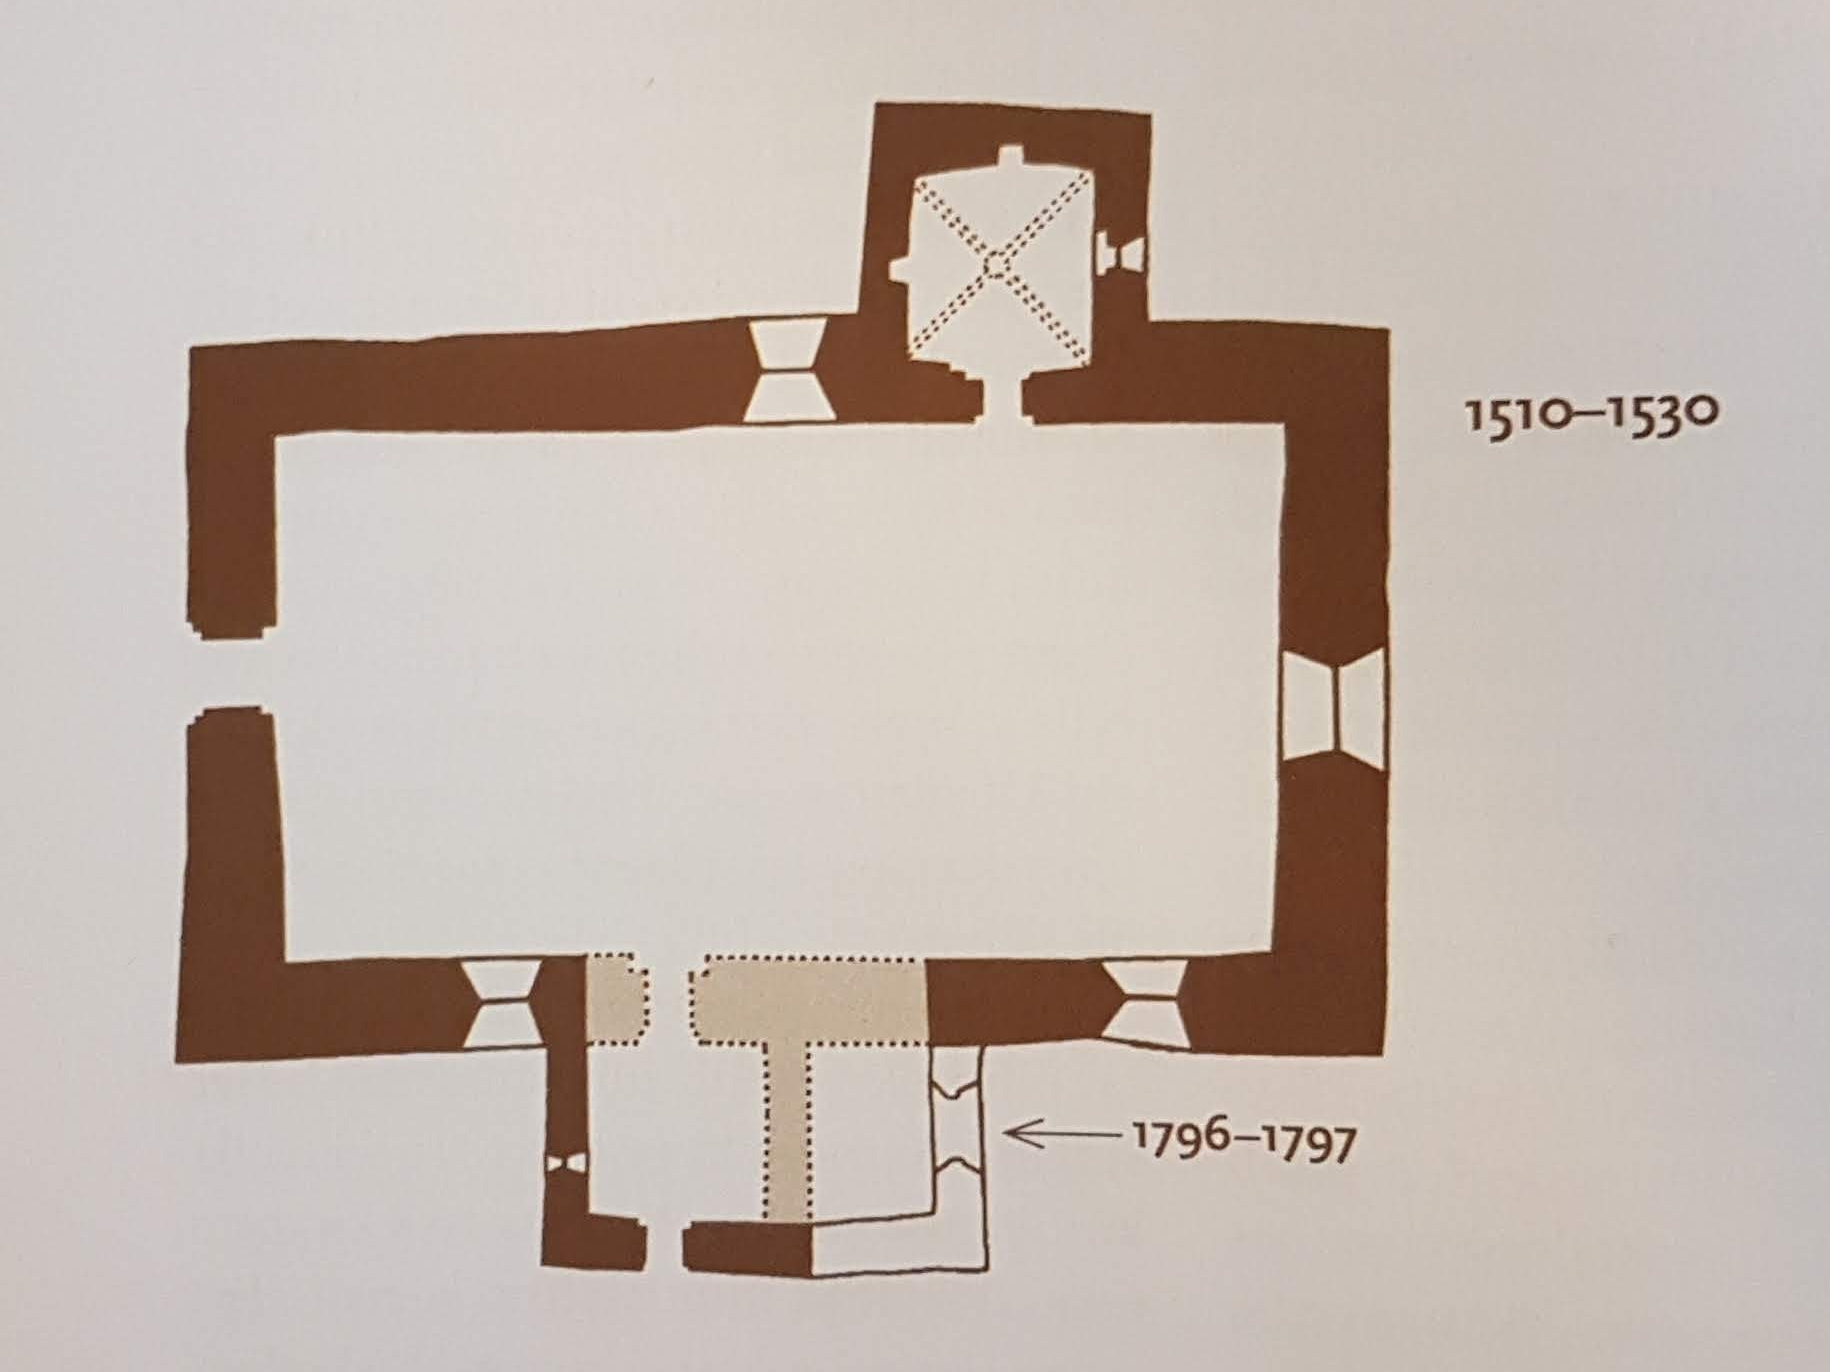 Messukylä medieval church floor plan